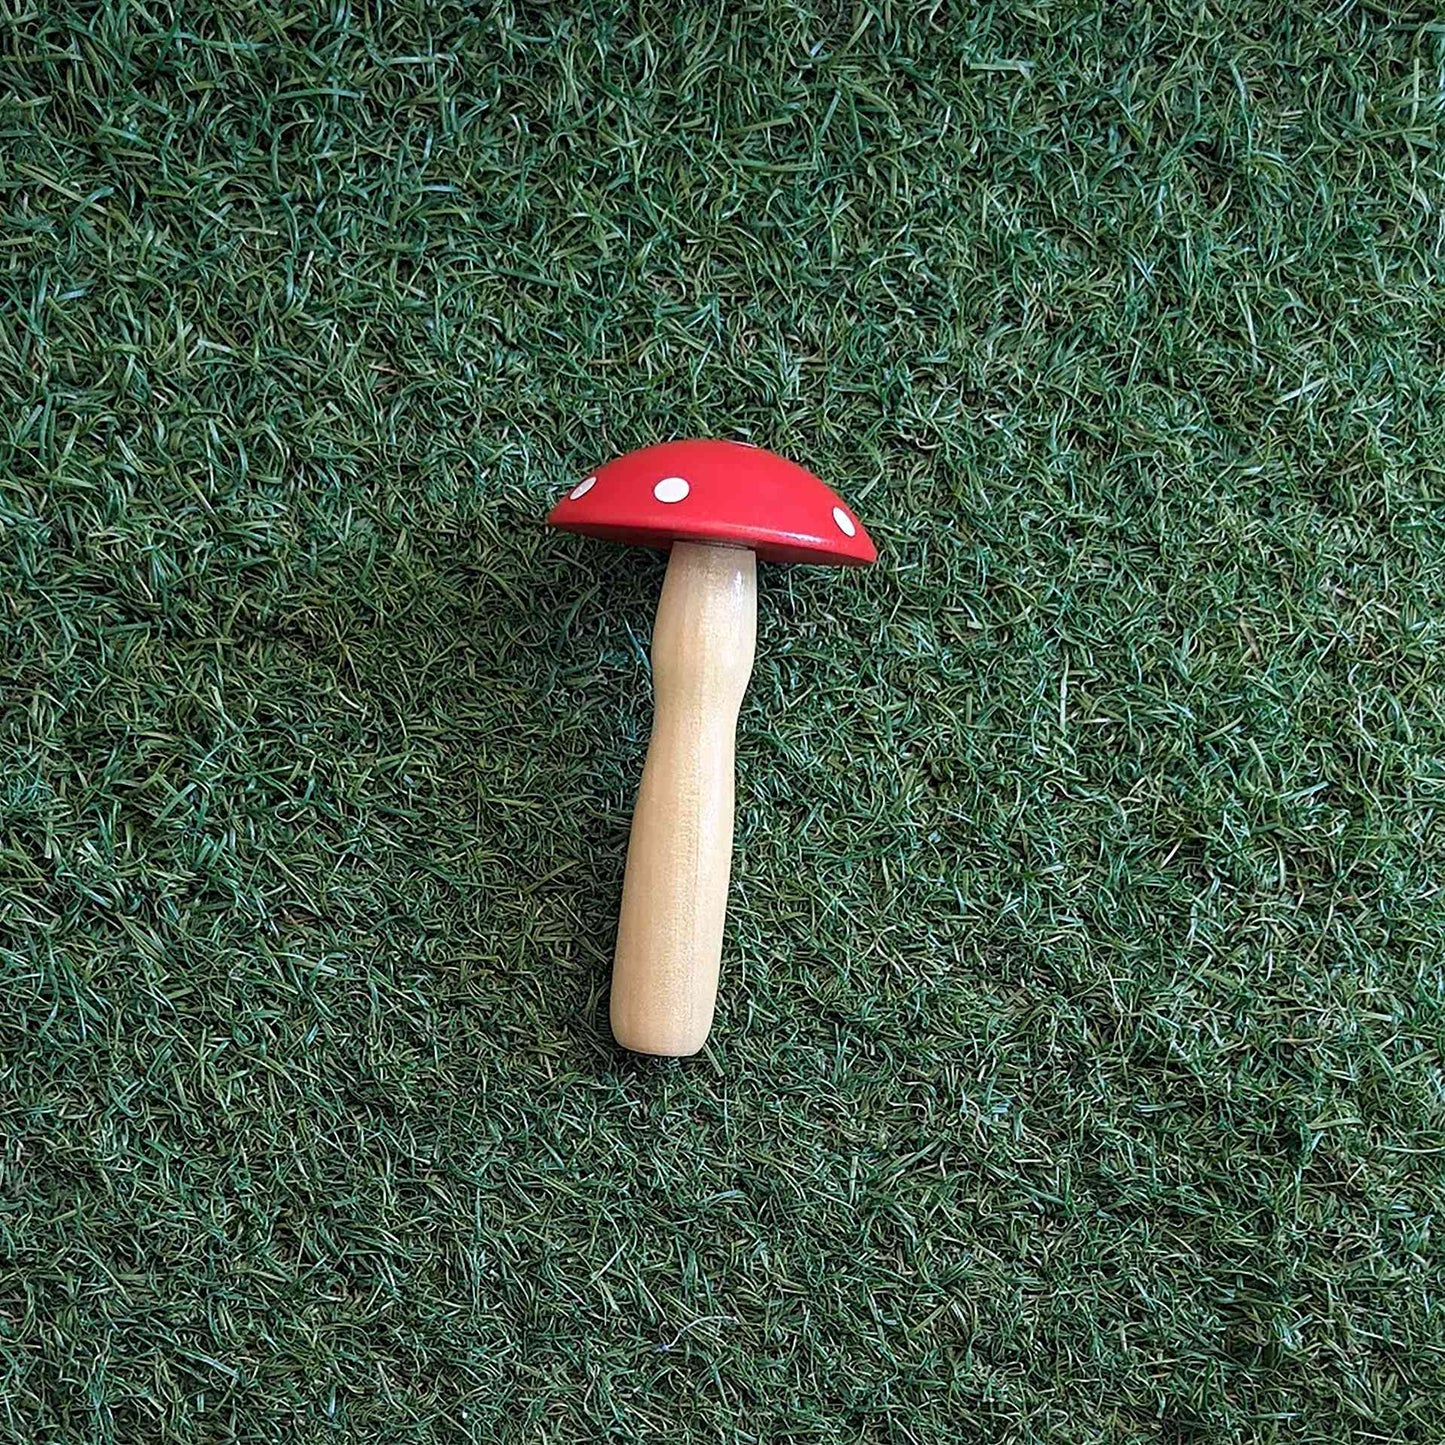 Darning Mushroom